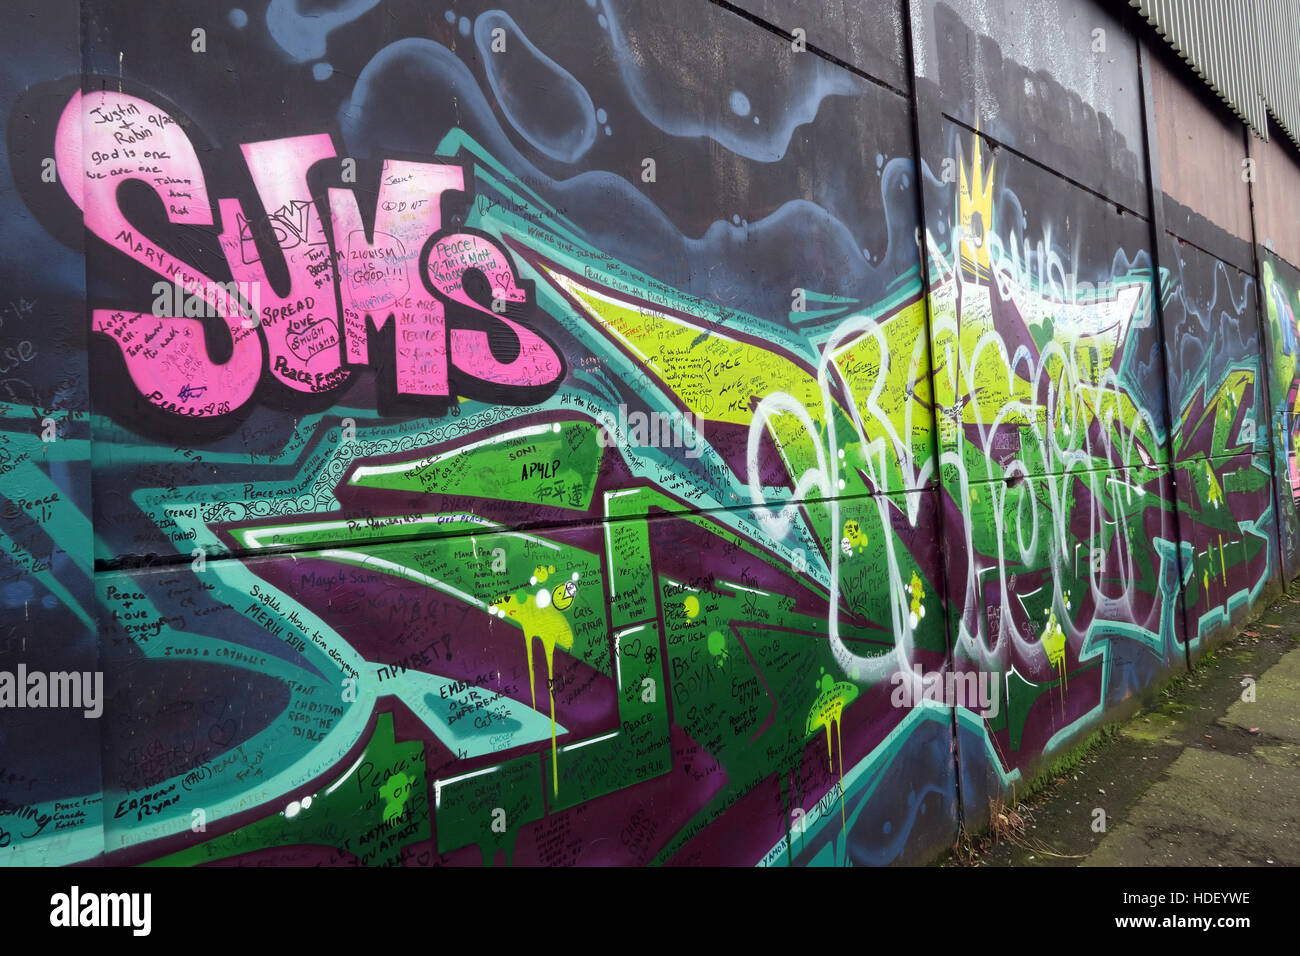 Sums - International Peace Wall,Cupar Way,West Belfast , Northern Ireland, UK Stock Photo